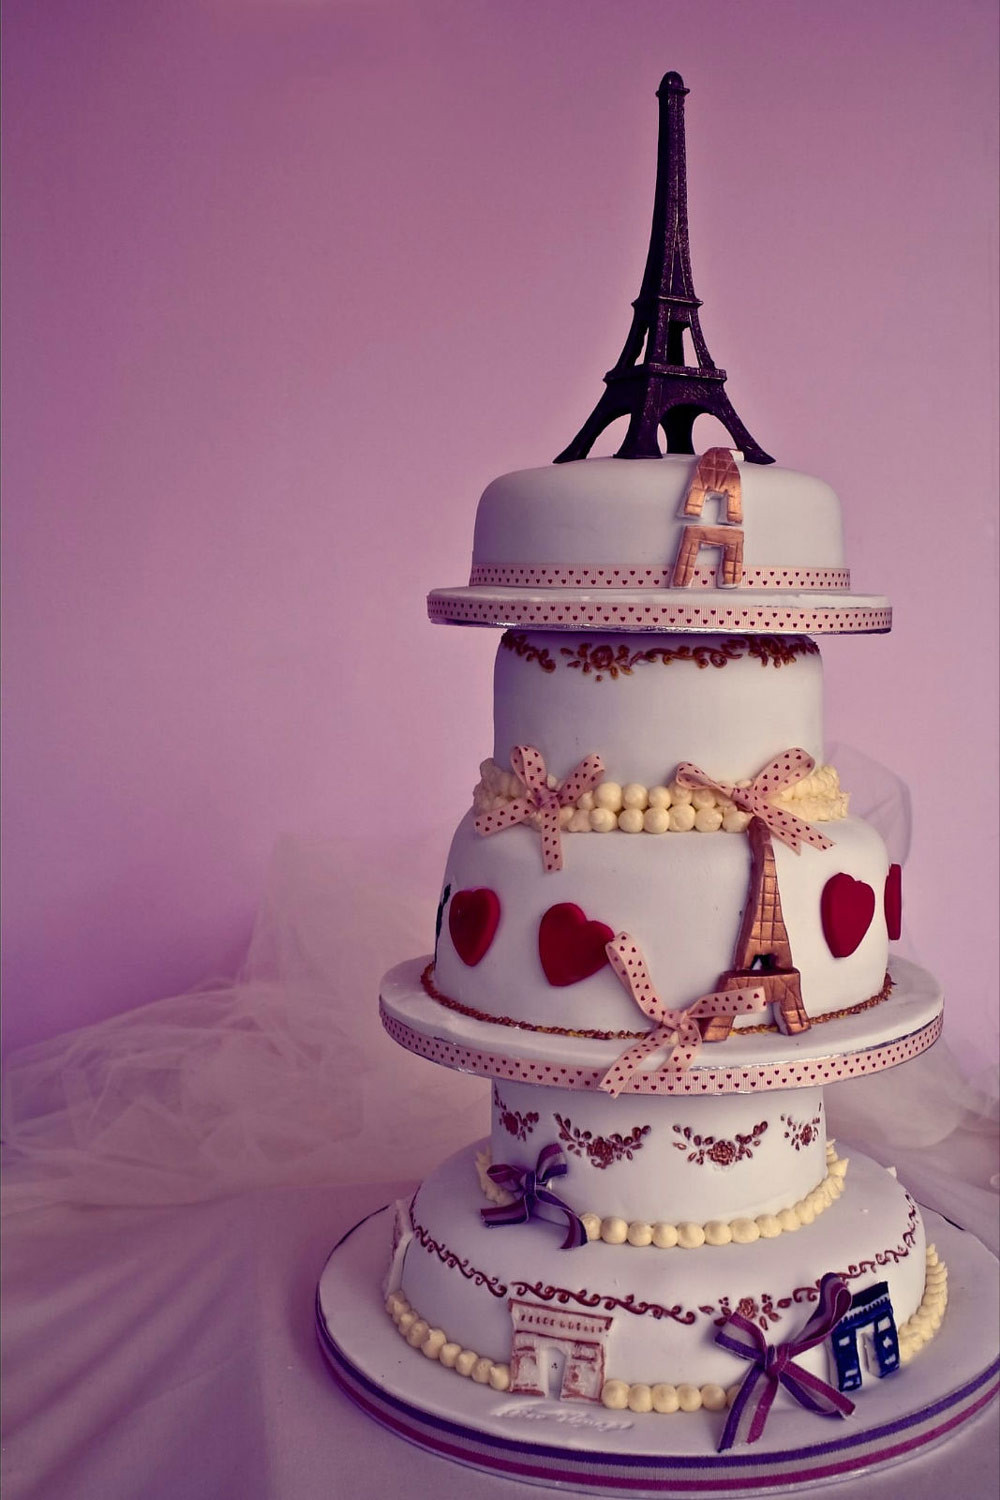 Paris Themed Wedding Cakes
 Parisian Desserts to Spoil Your Guests